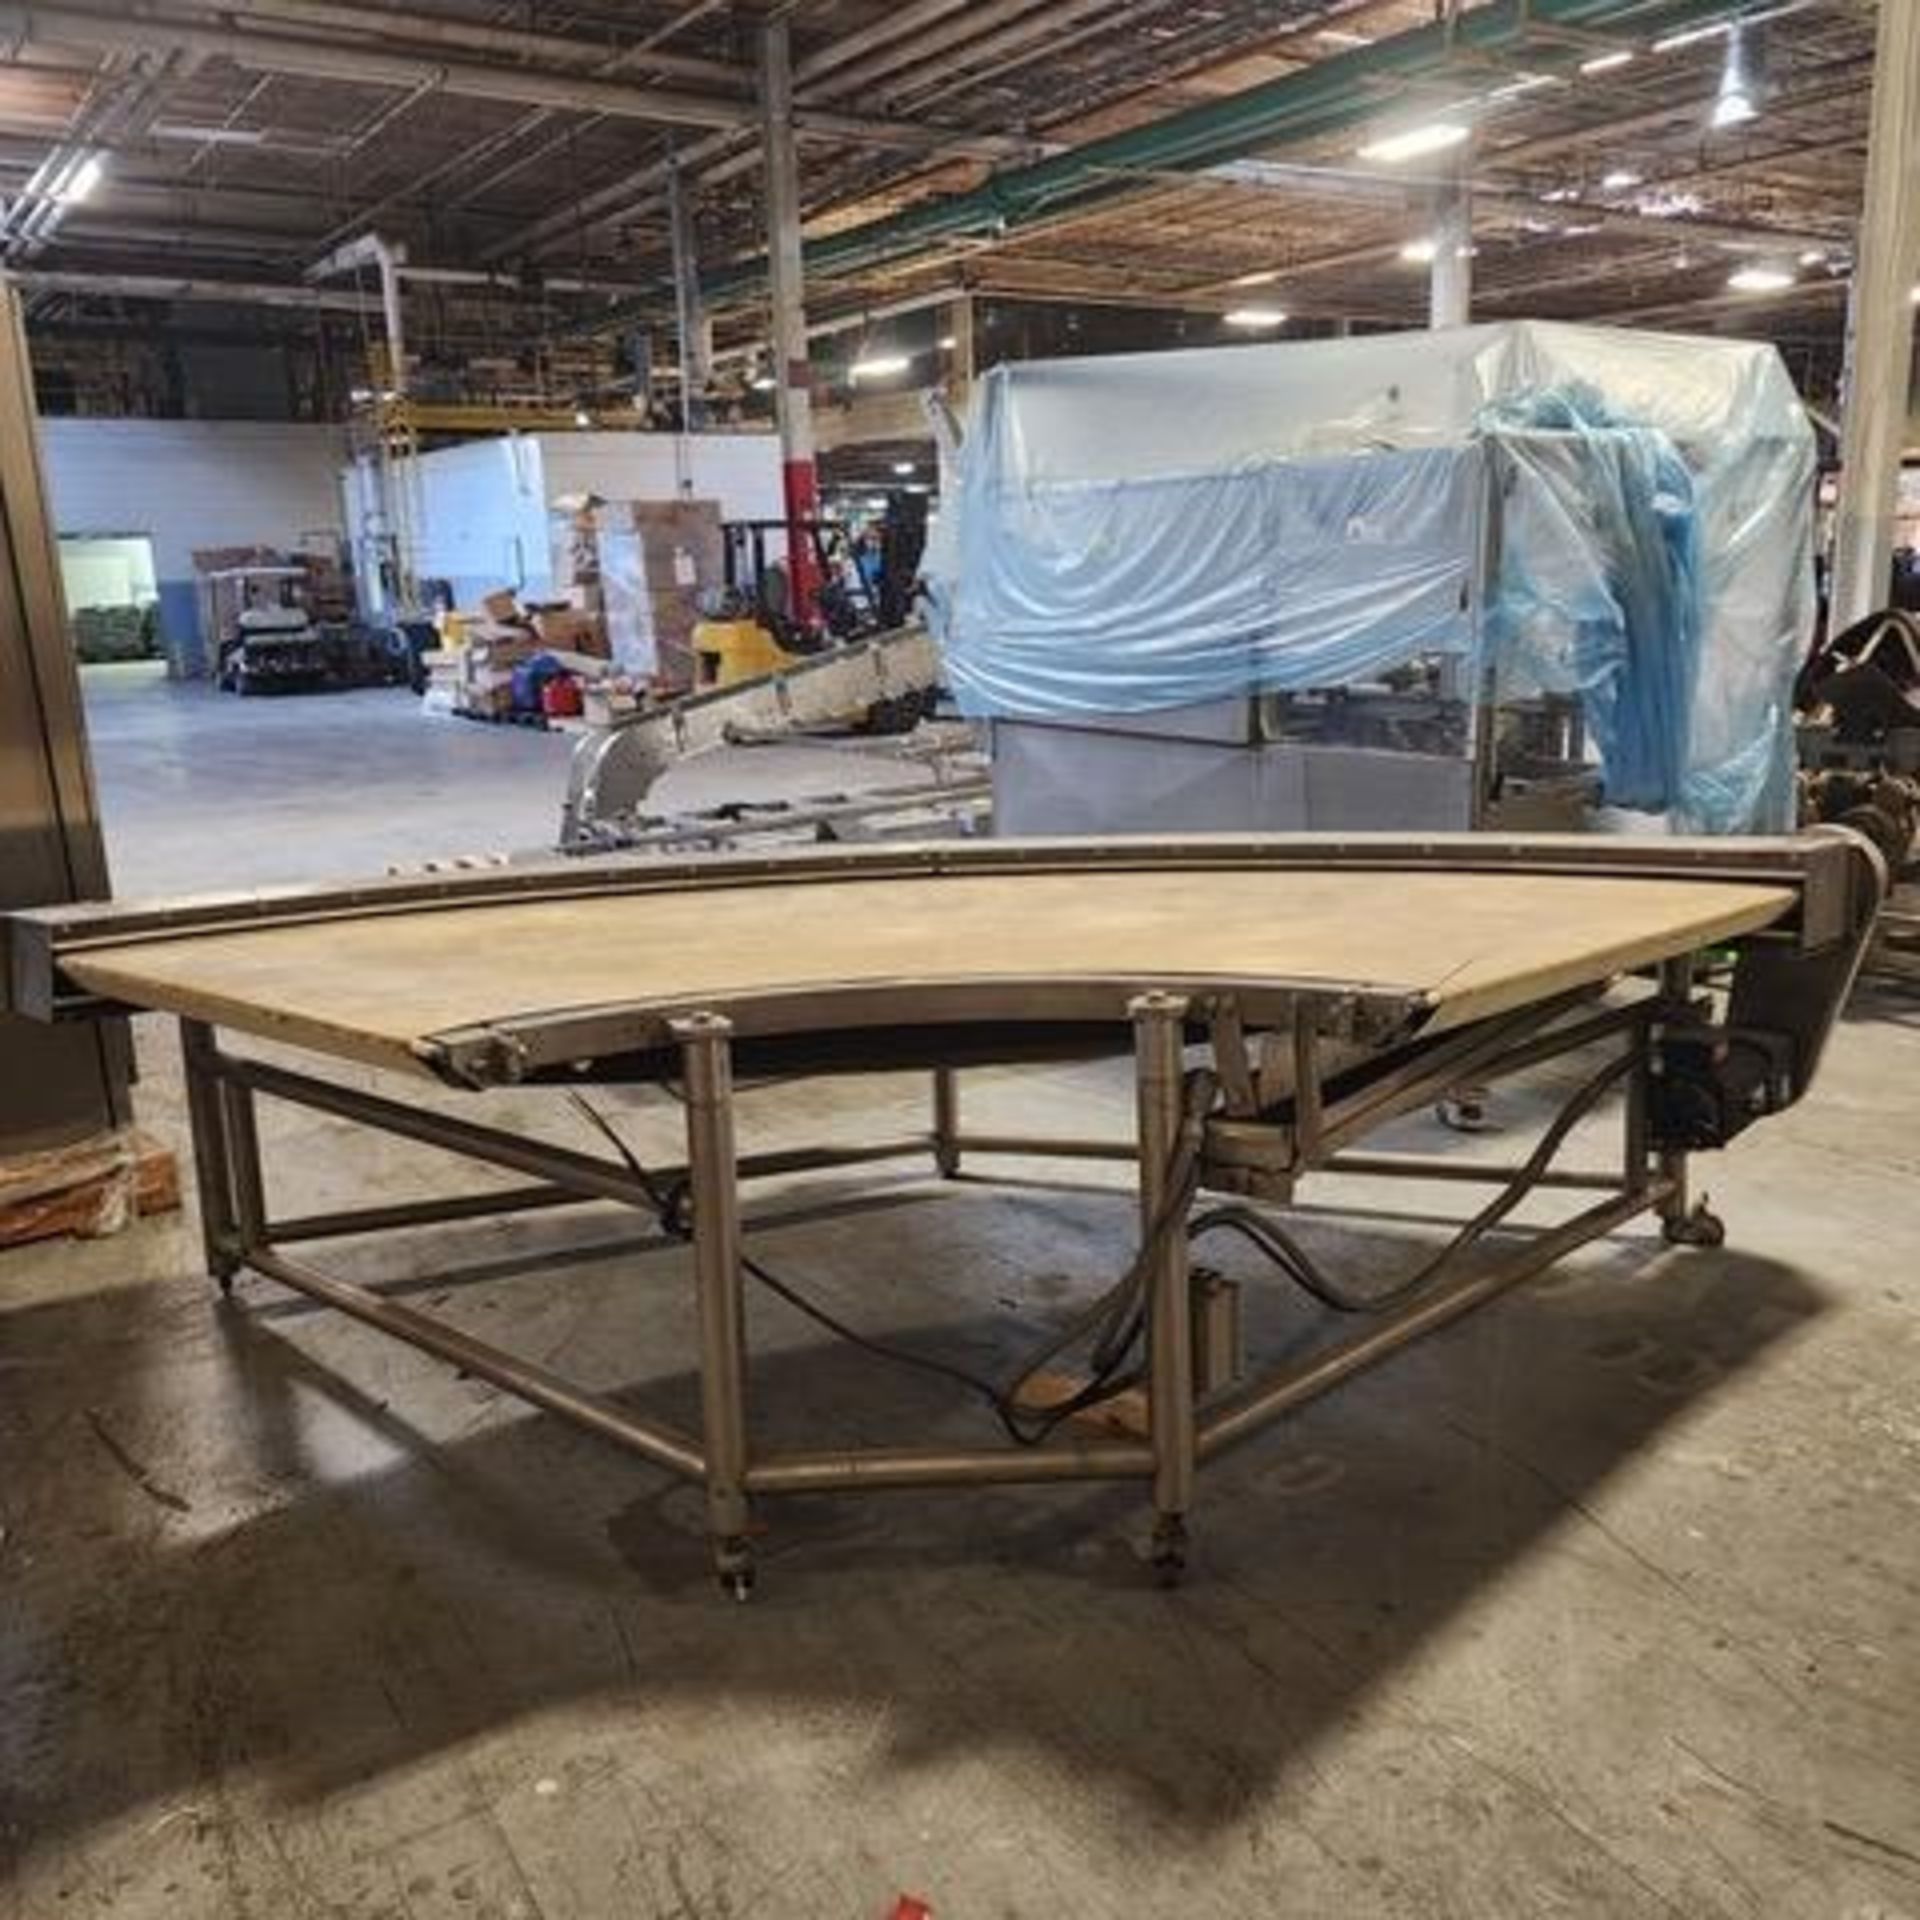 Stainless Steel 90 Deg Conveyor | Rig Fee $150